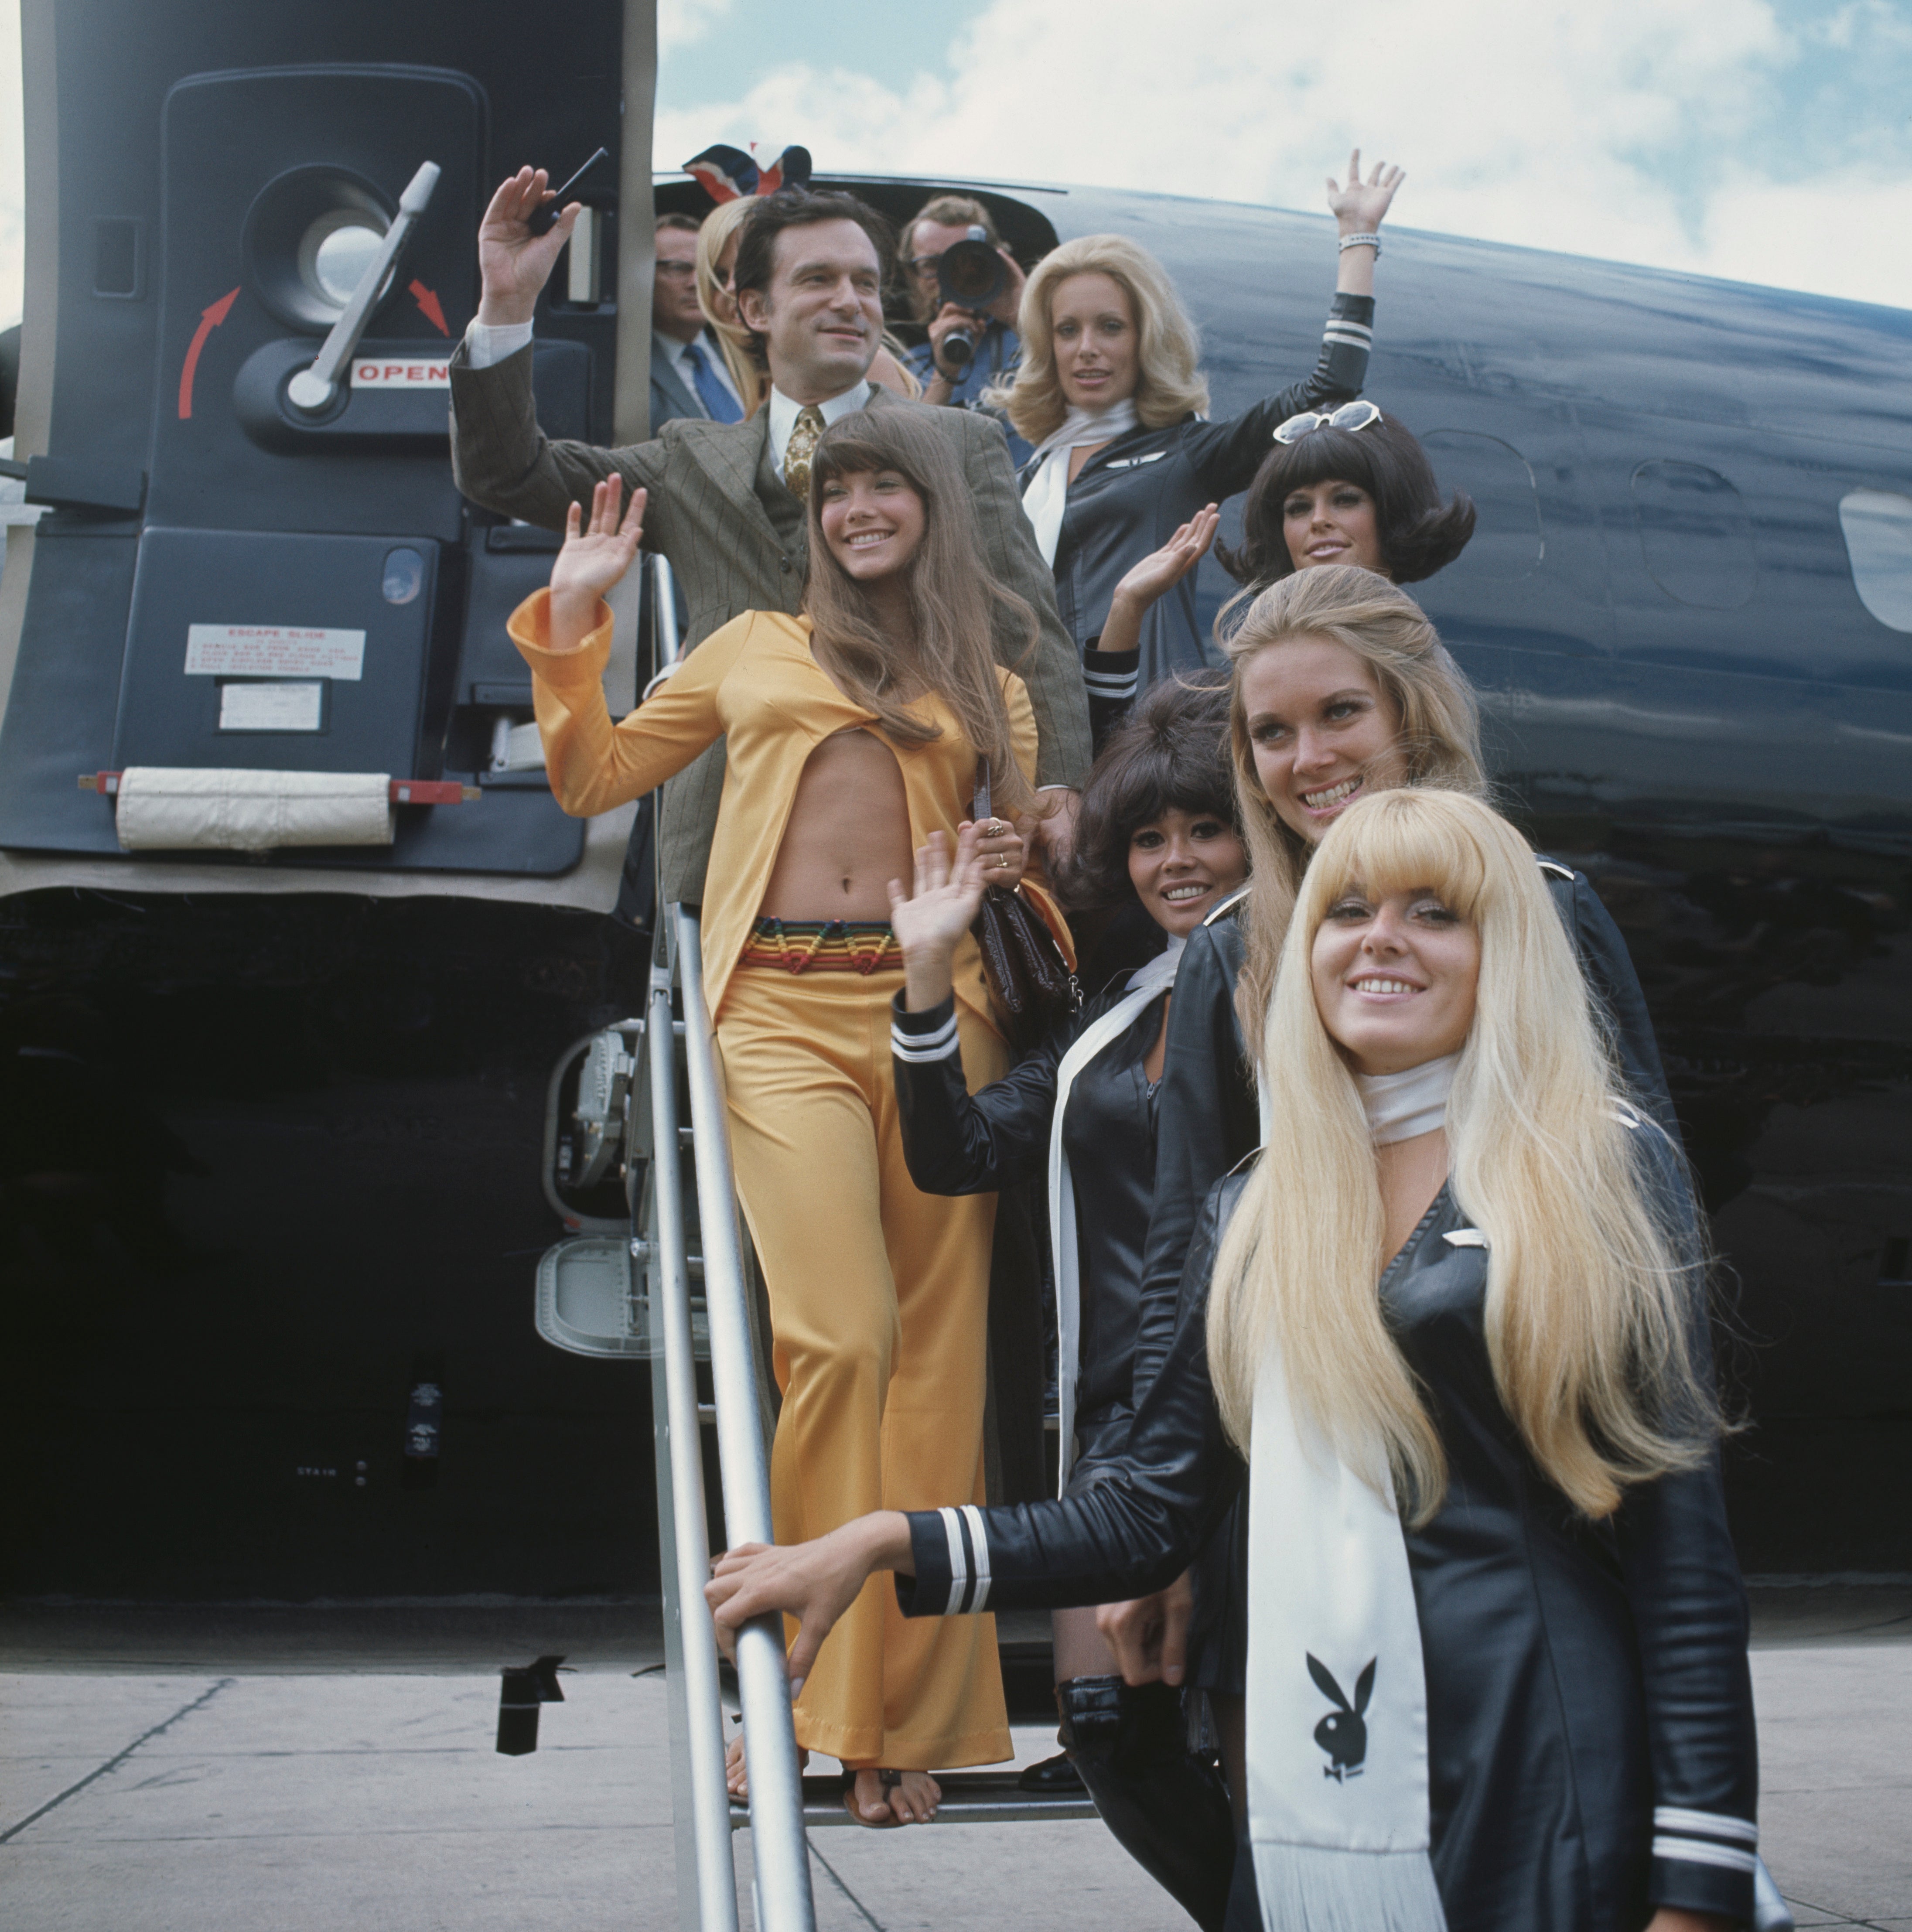 Hugh Hefner arrives at London Airport (now Heathrow Airport) on 29 July 1970